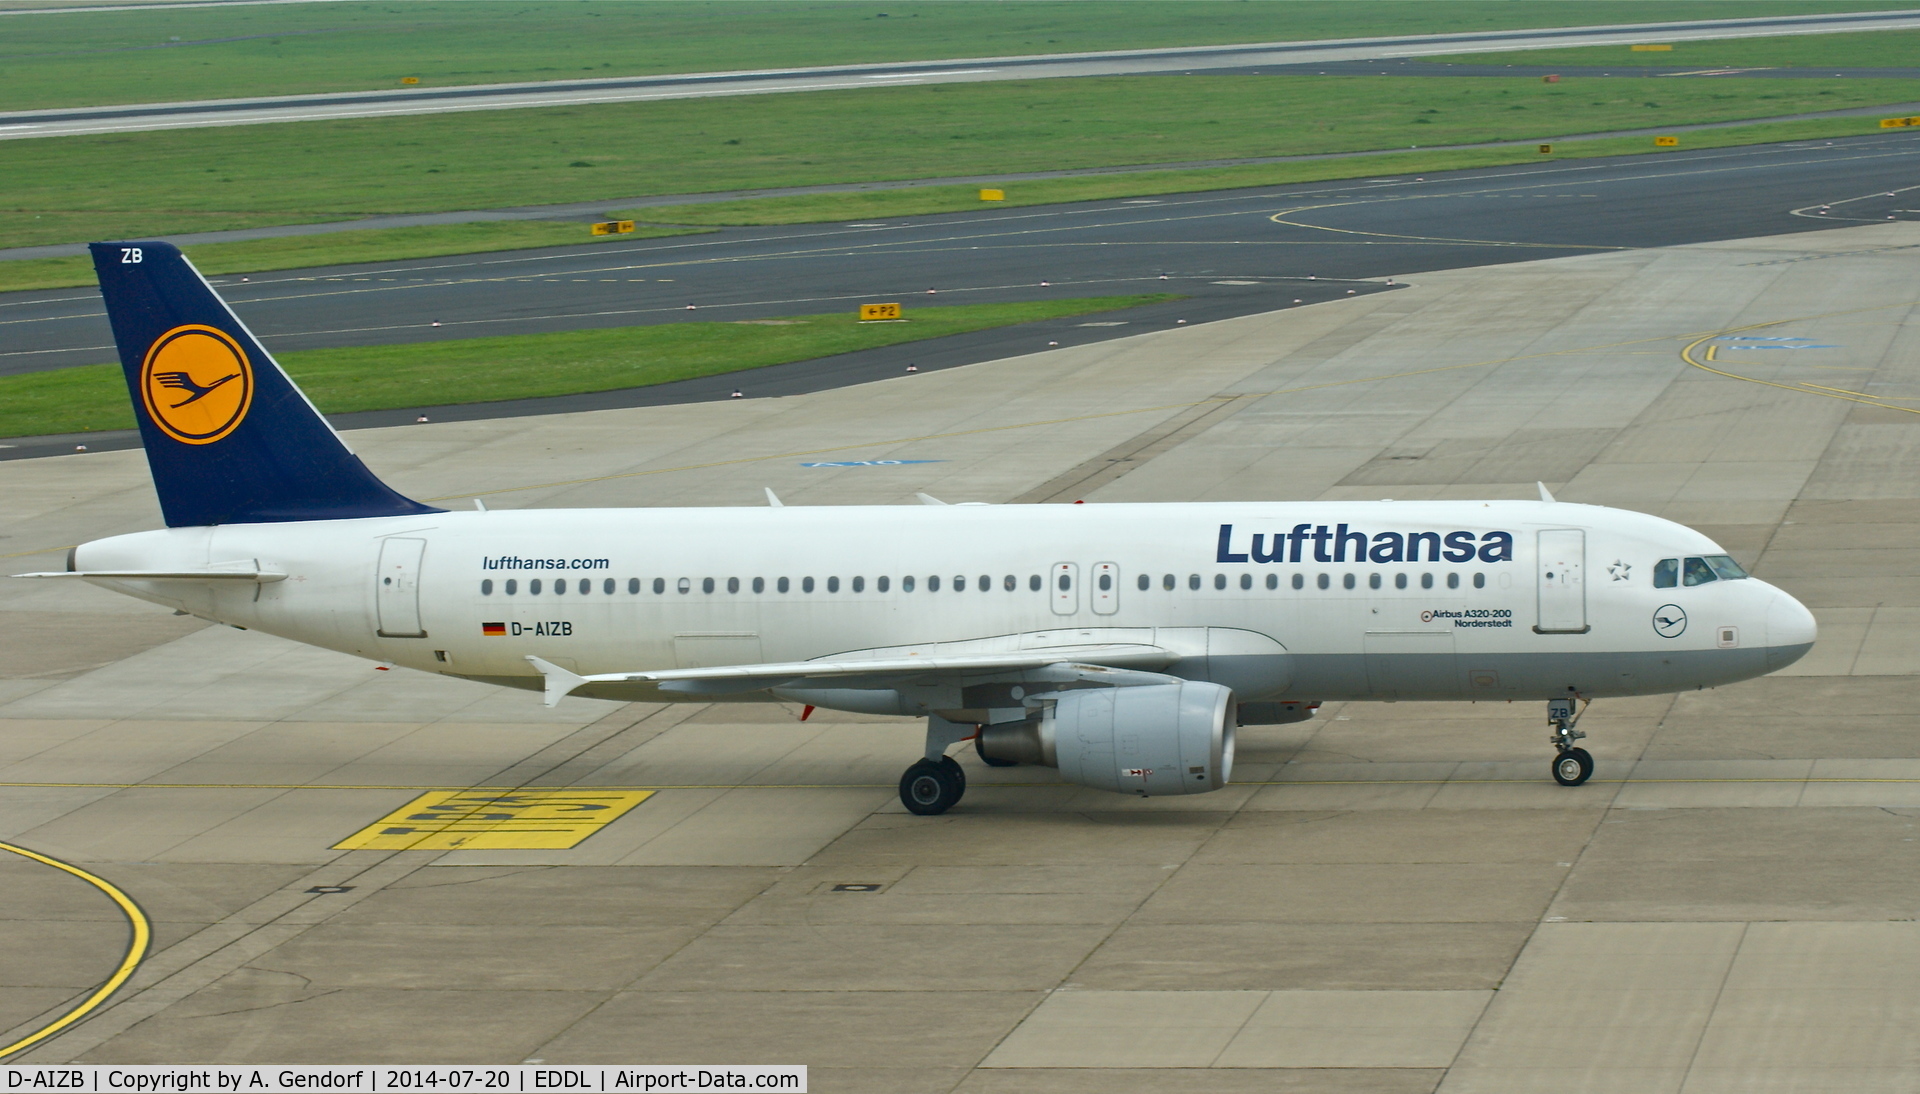 D-AIZB, 2009 Airbus A320-214 C/N 4120, Lufthansa, is here reaching the gate at Düsseldorf Int'l(EDDL)